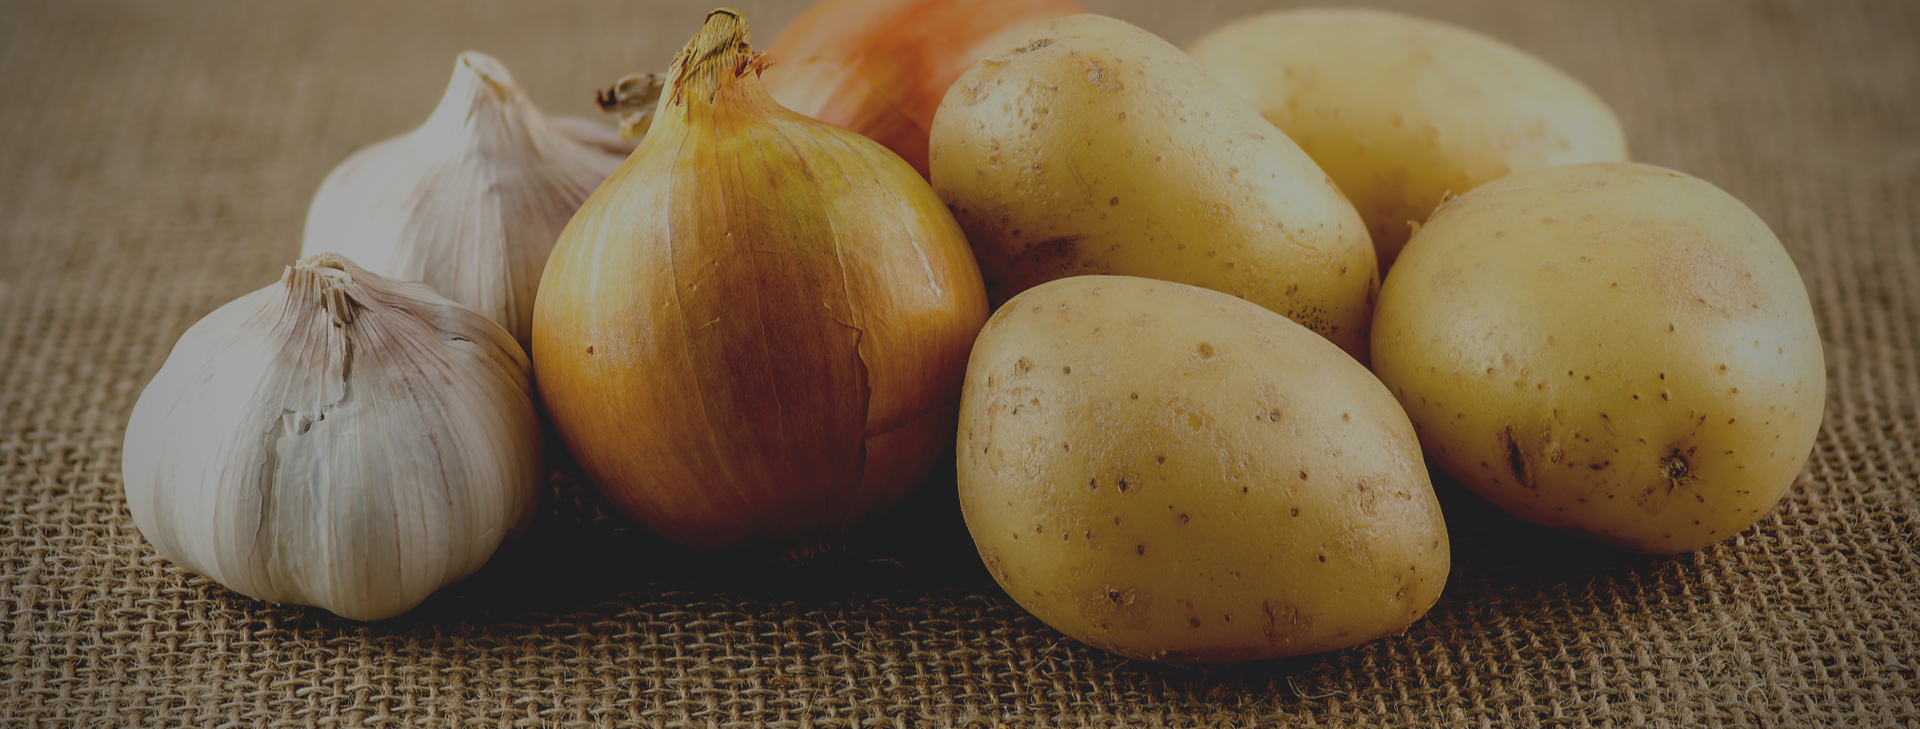 seed-potatoes-garlic-onions